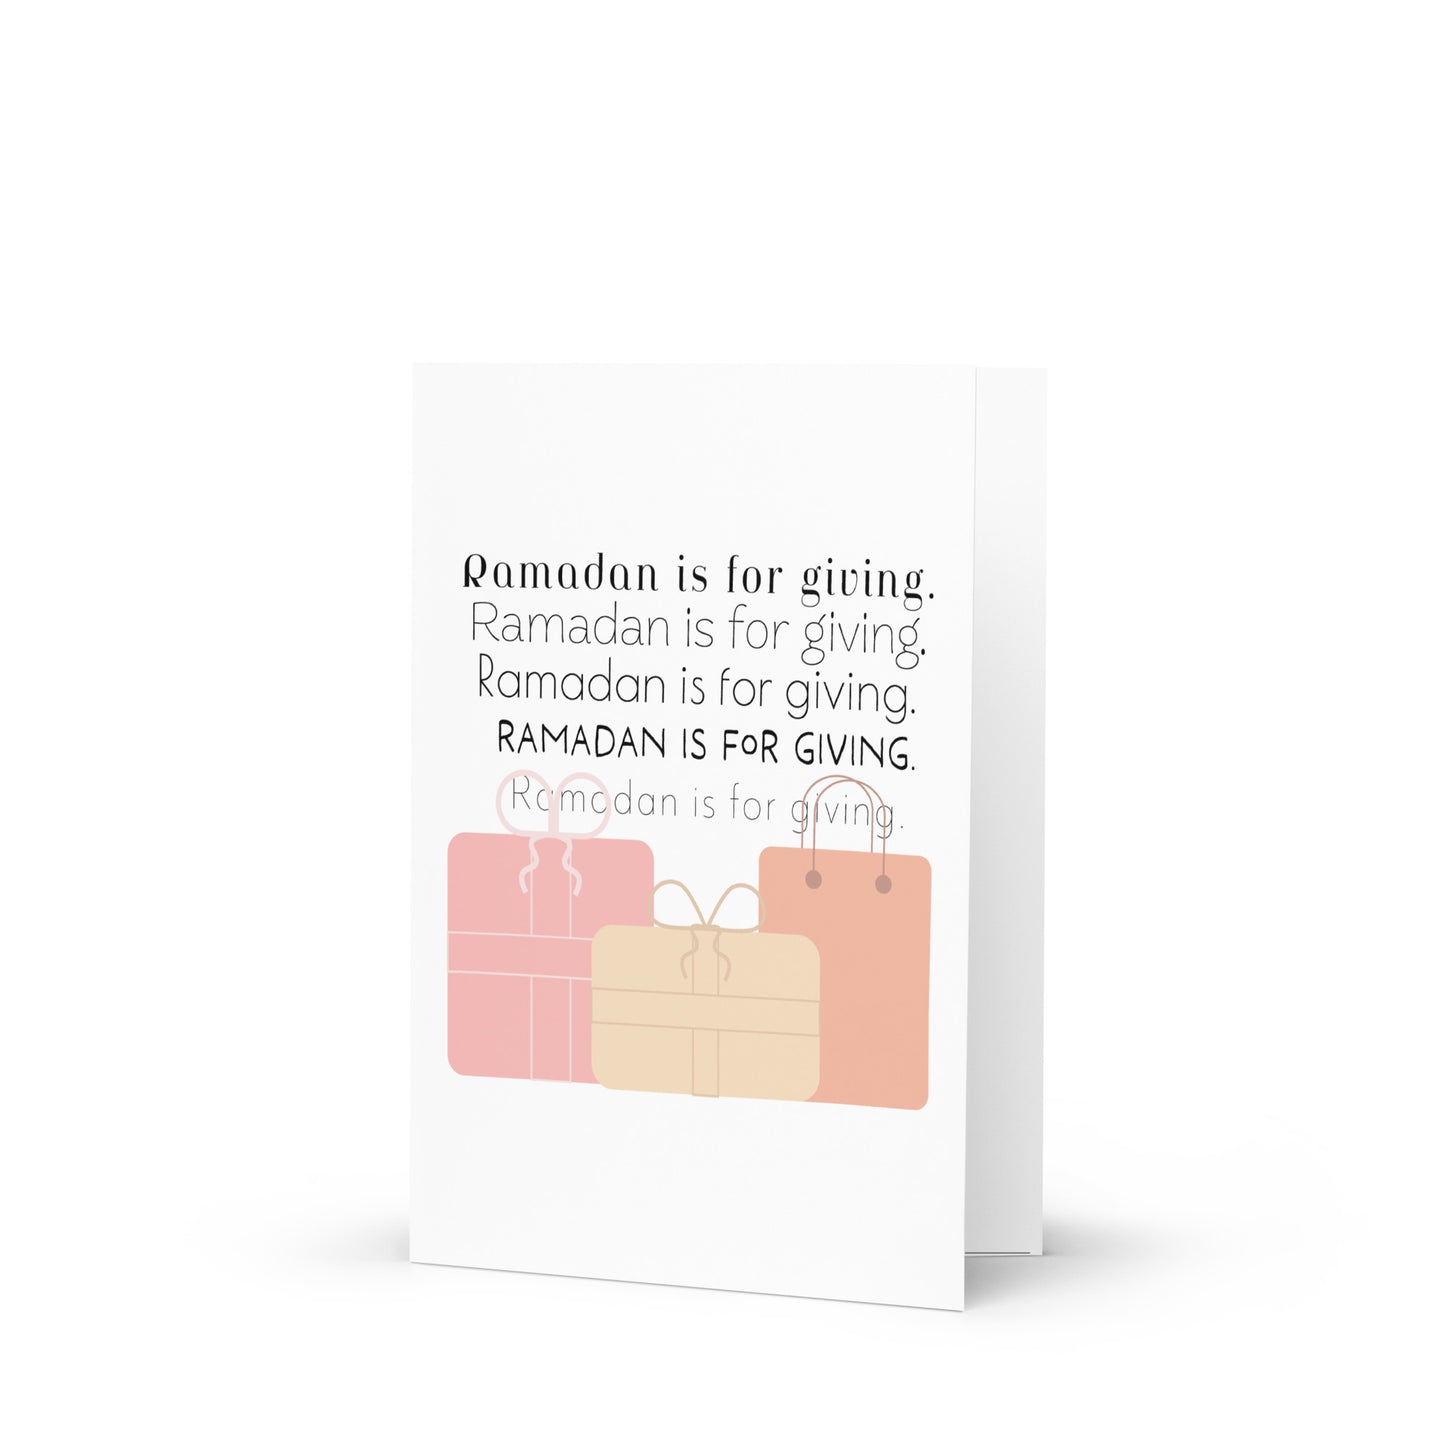 Ramadan Mubarak Gifts - Greeting card